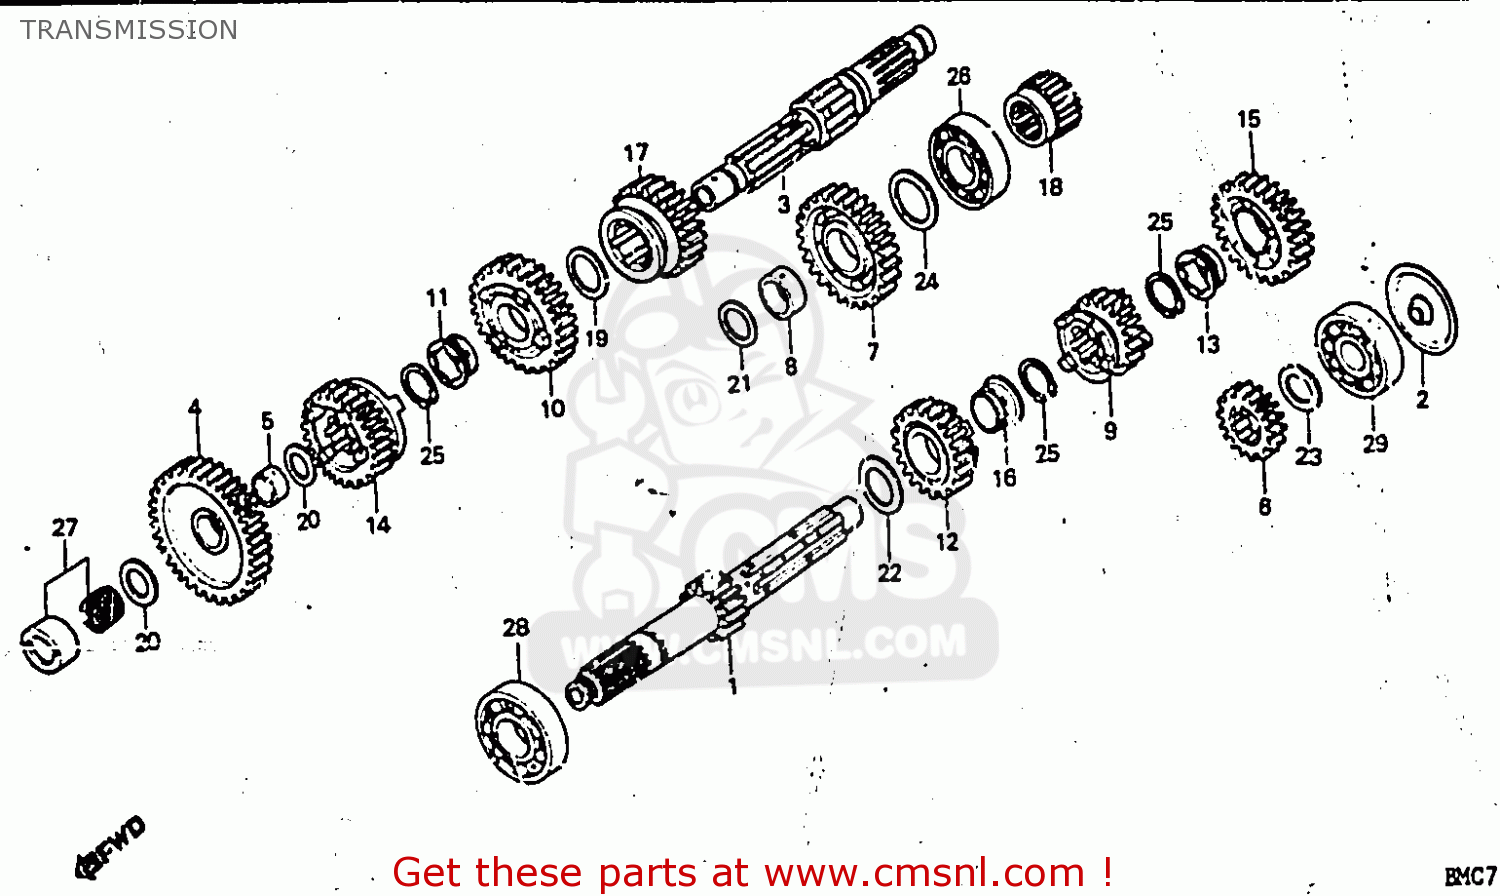 Getriebe RC12 will nicht mehr - Seite 2 Honda-cx650e-1983-d-germany-transmission_big00026176b8_c4b2